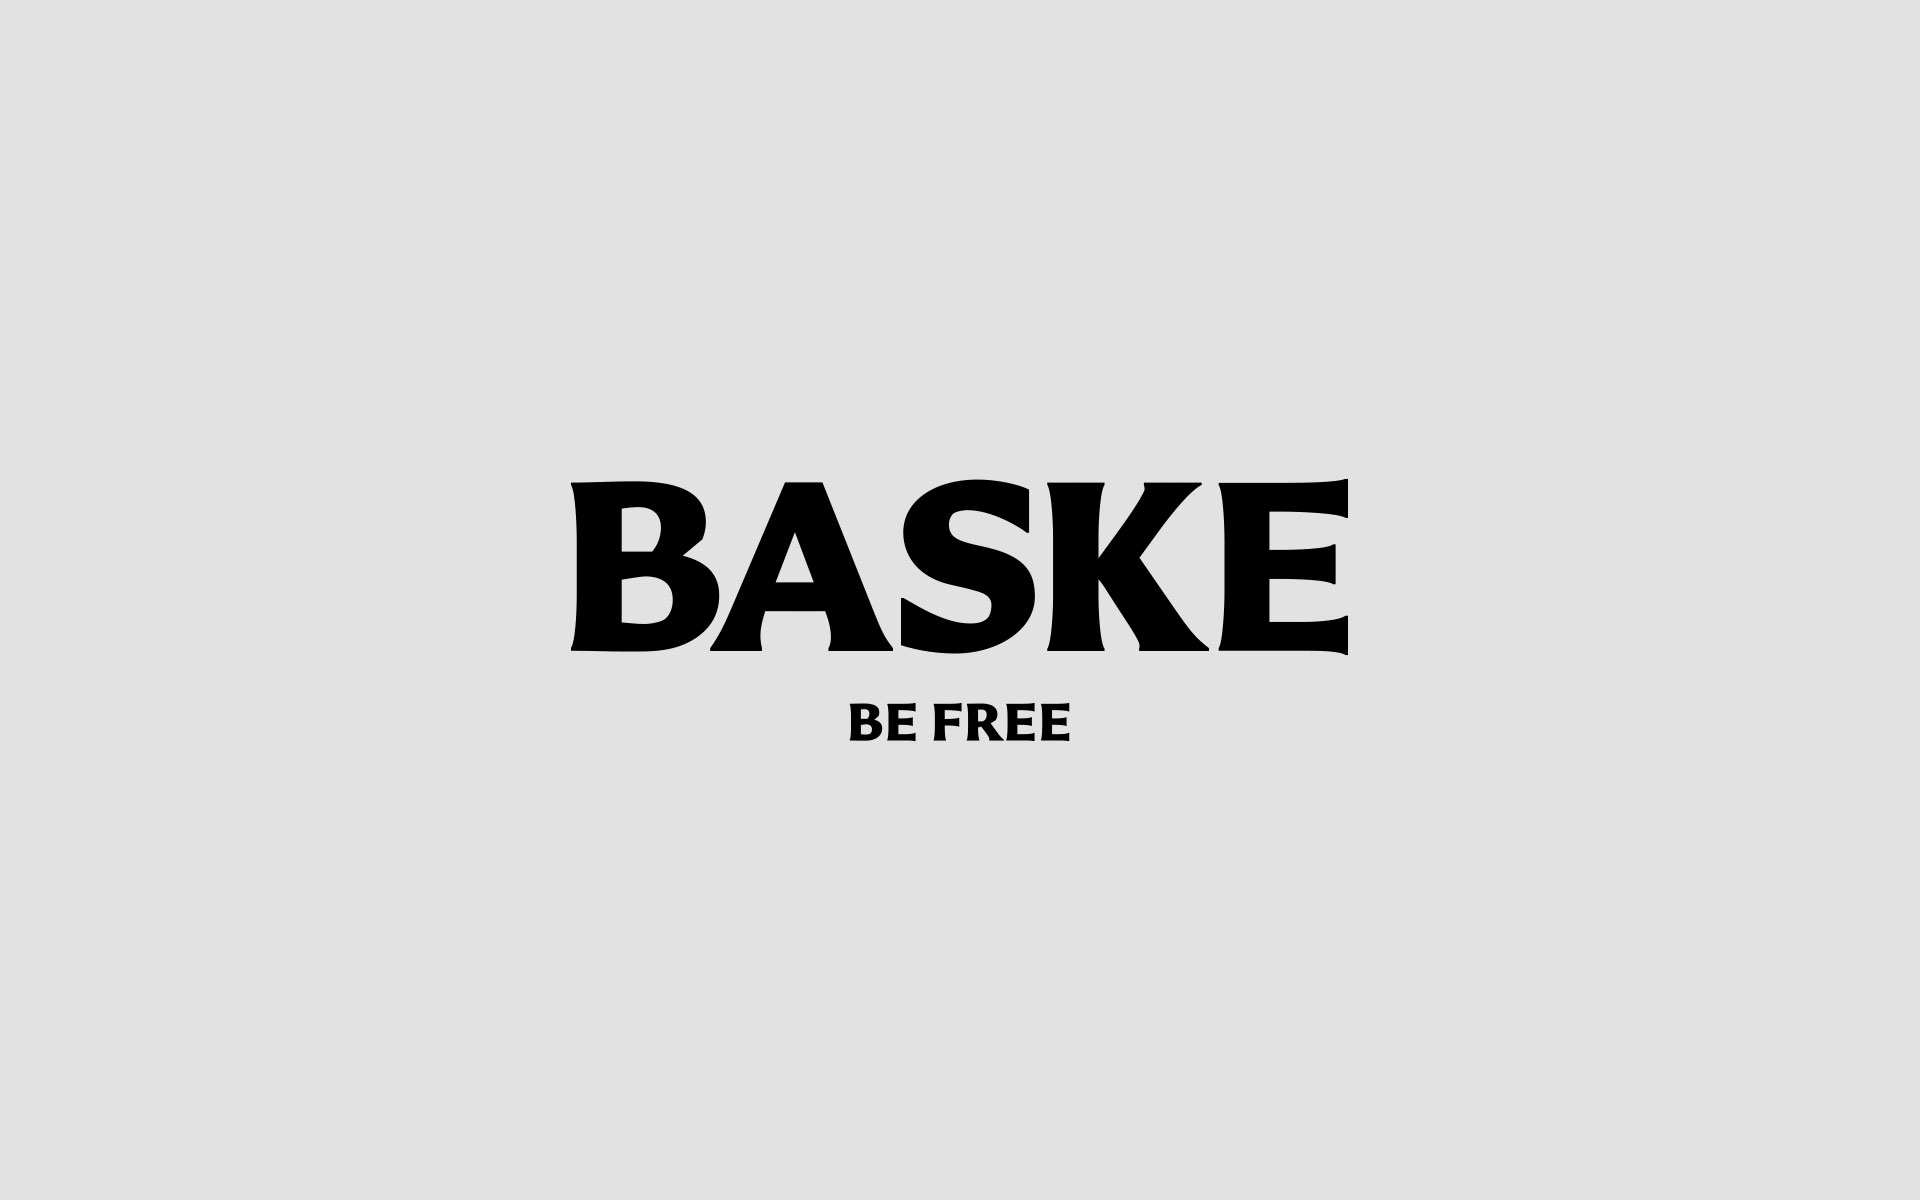 Baske - be free (by Joseba Attard)